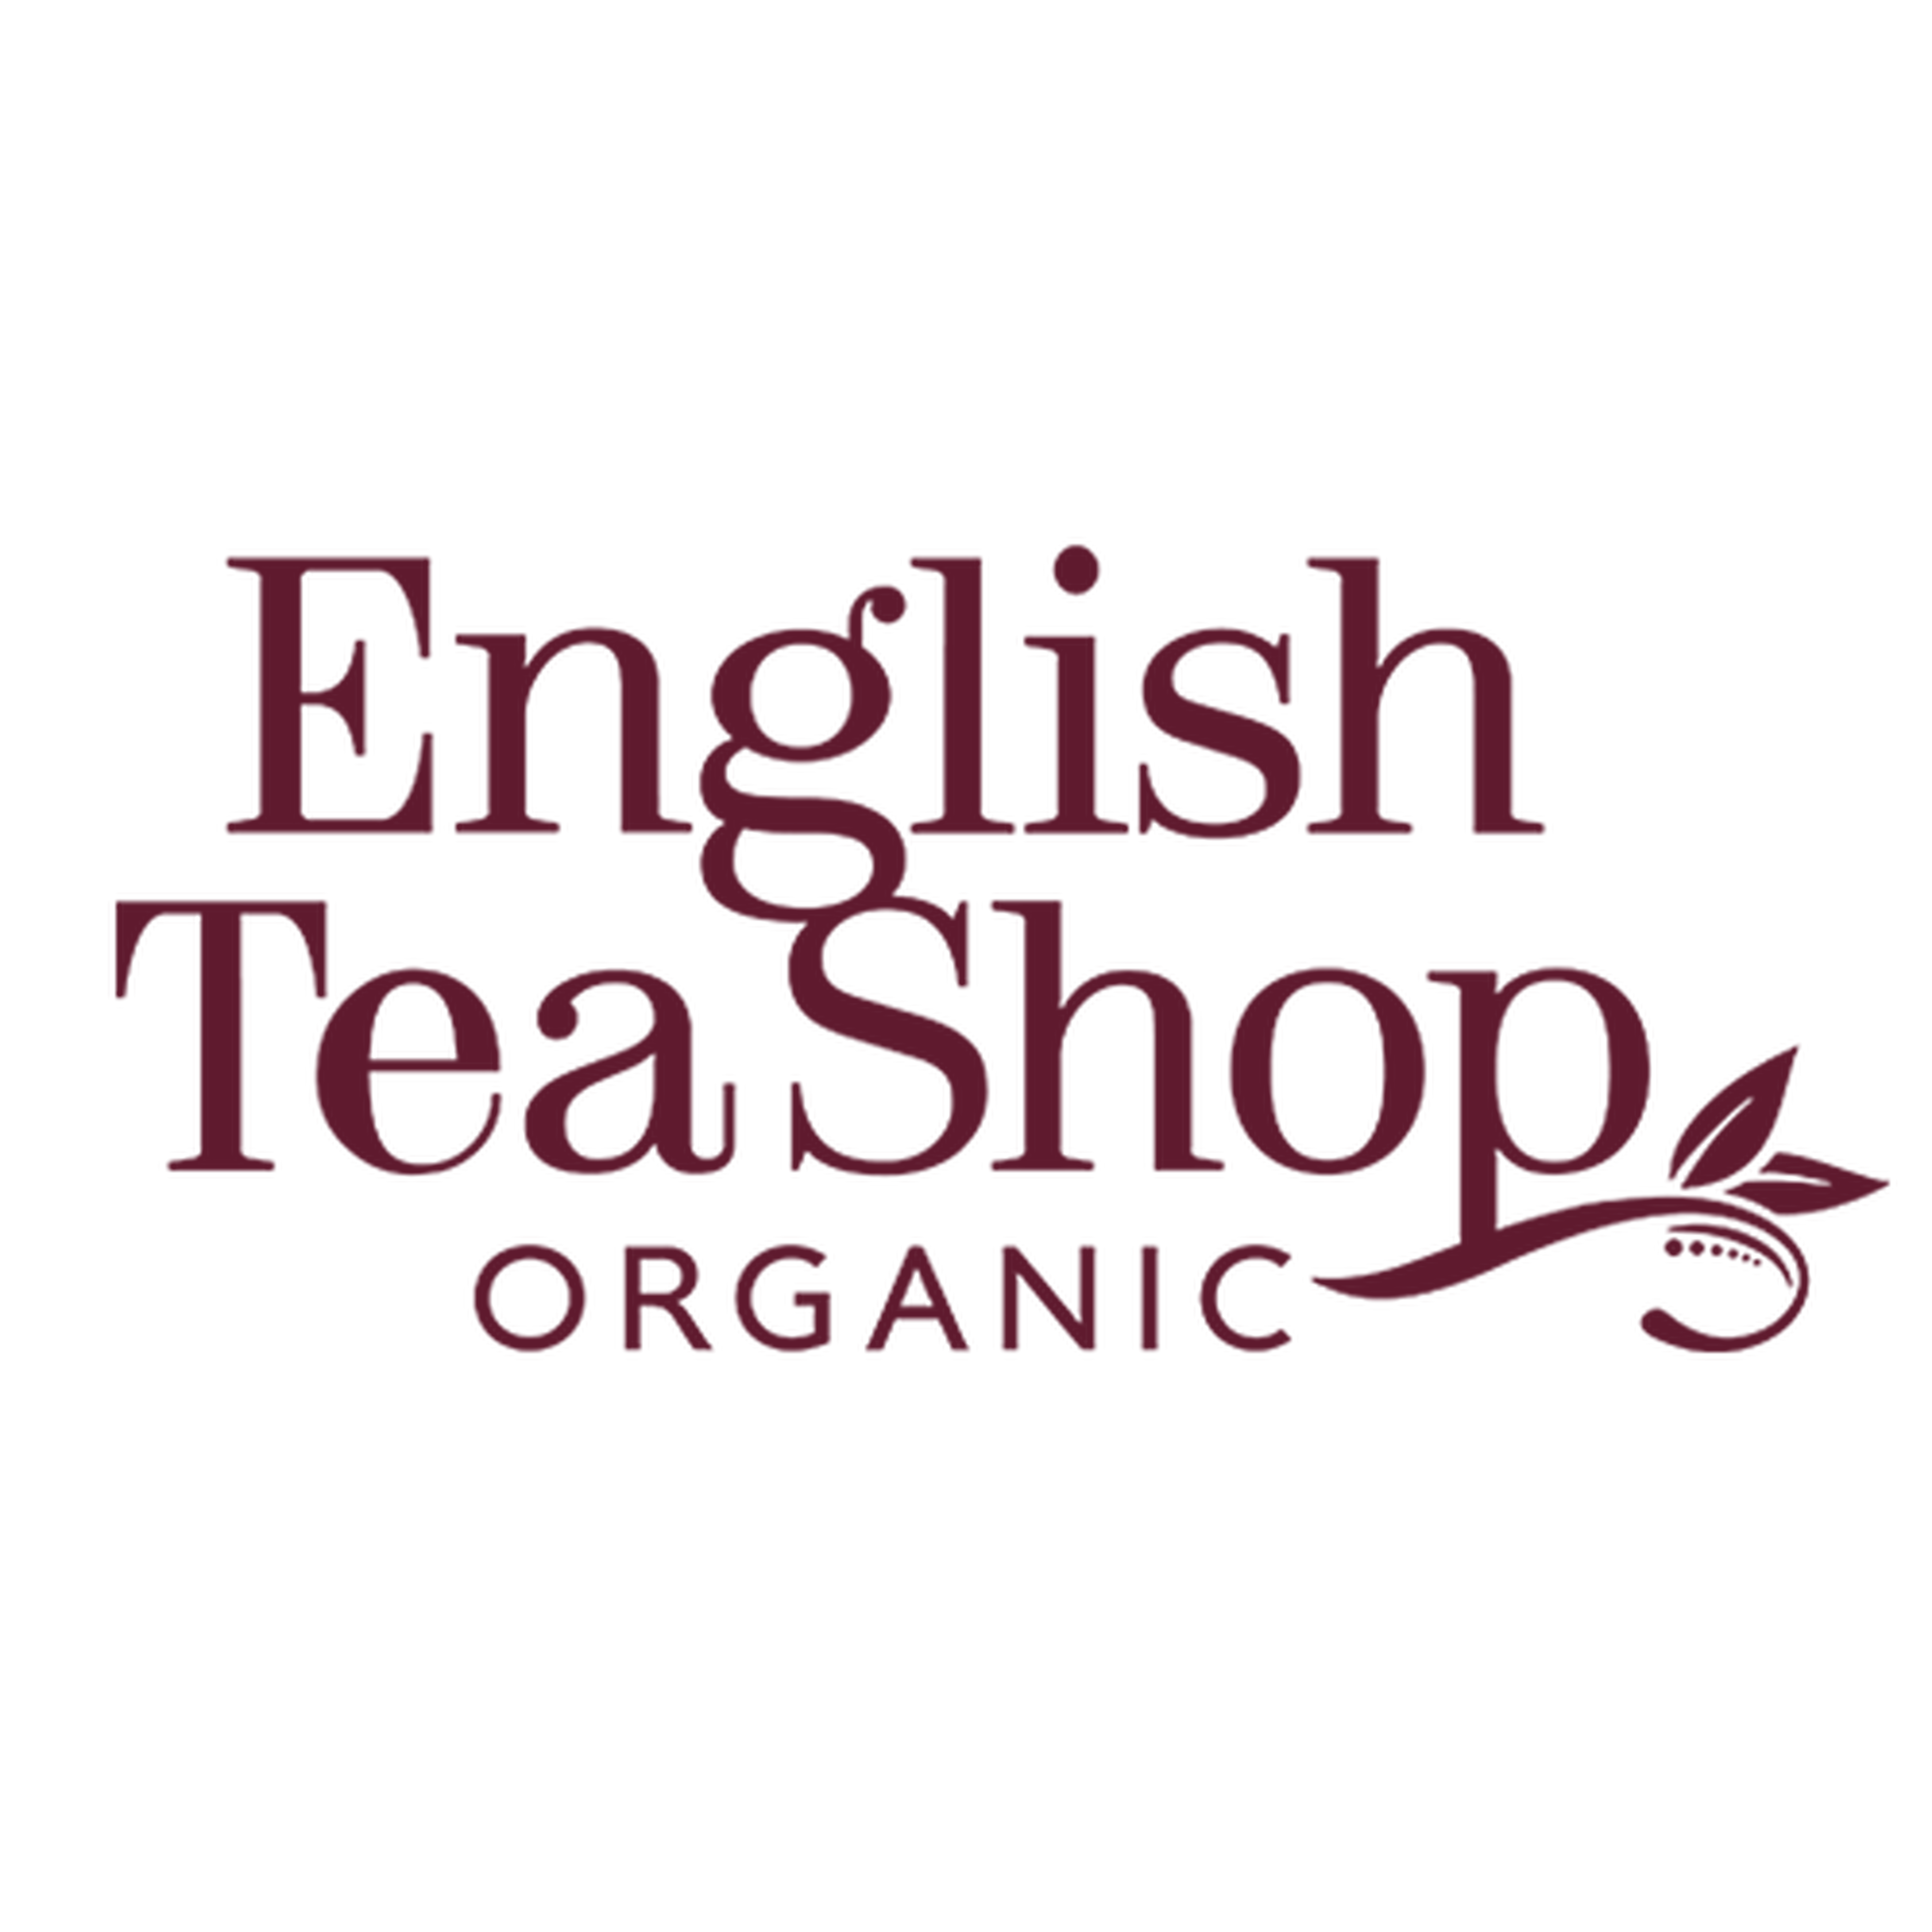 English Tea Shop logotype